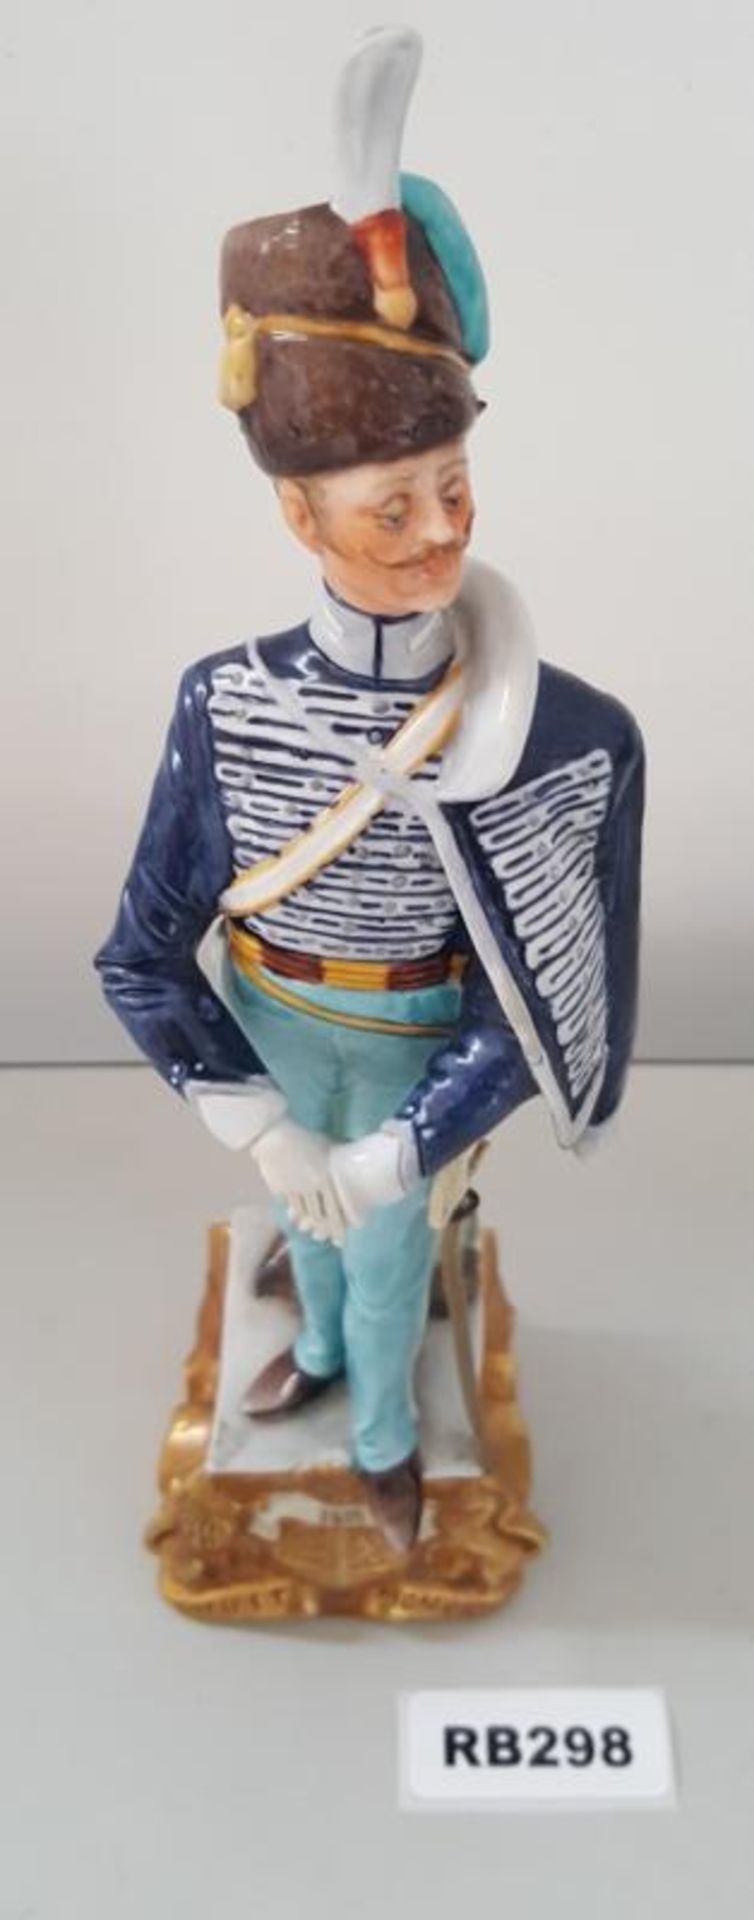 1 x Rare Italian Capodimonte Porcelain Bruno Merli Soldiers Figurines 1815- Ref RB298 E - Image 3 of 5